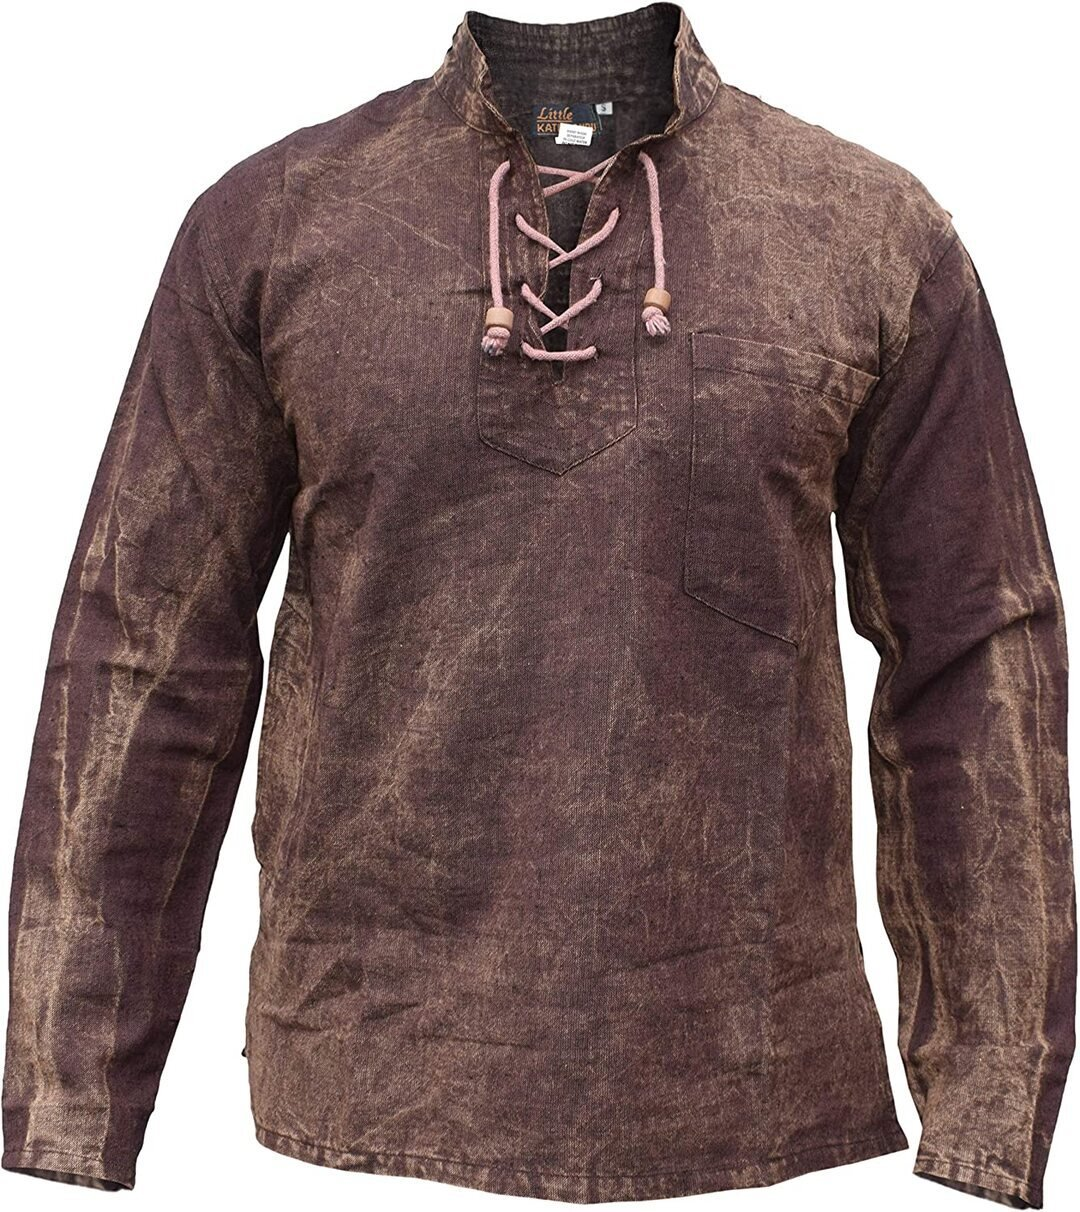 Gheri Mens Hemp Cotton Lace Up V Neck Shirt